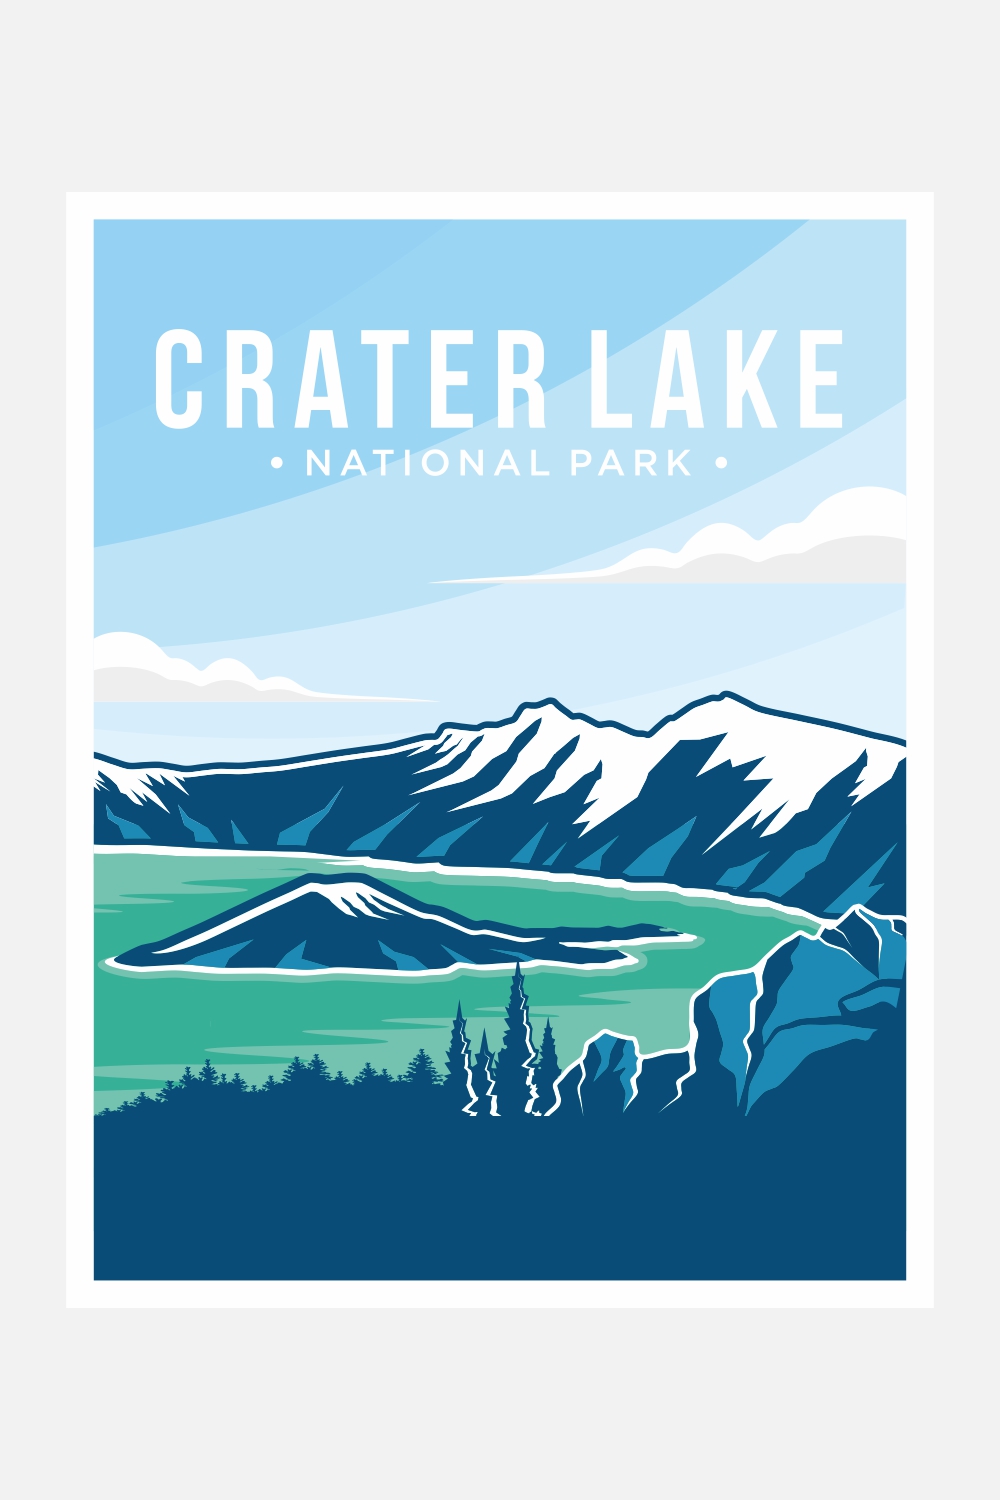 Crater Lake National Park Poster Vector Illustration Design – Only $10 pinterest preview image.